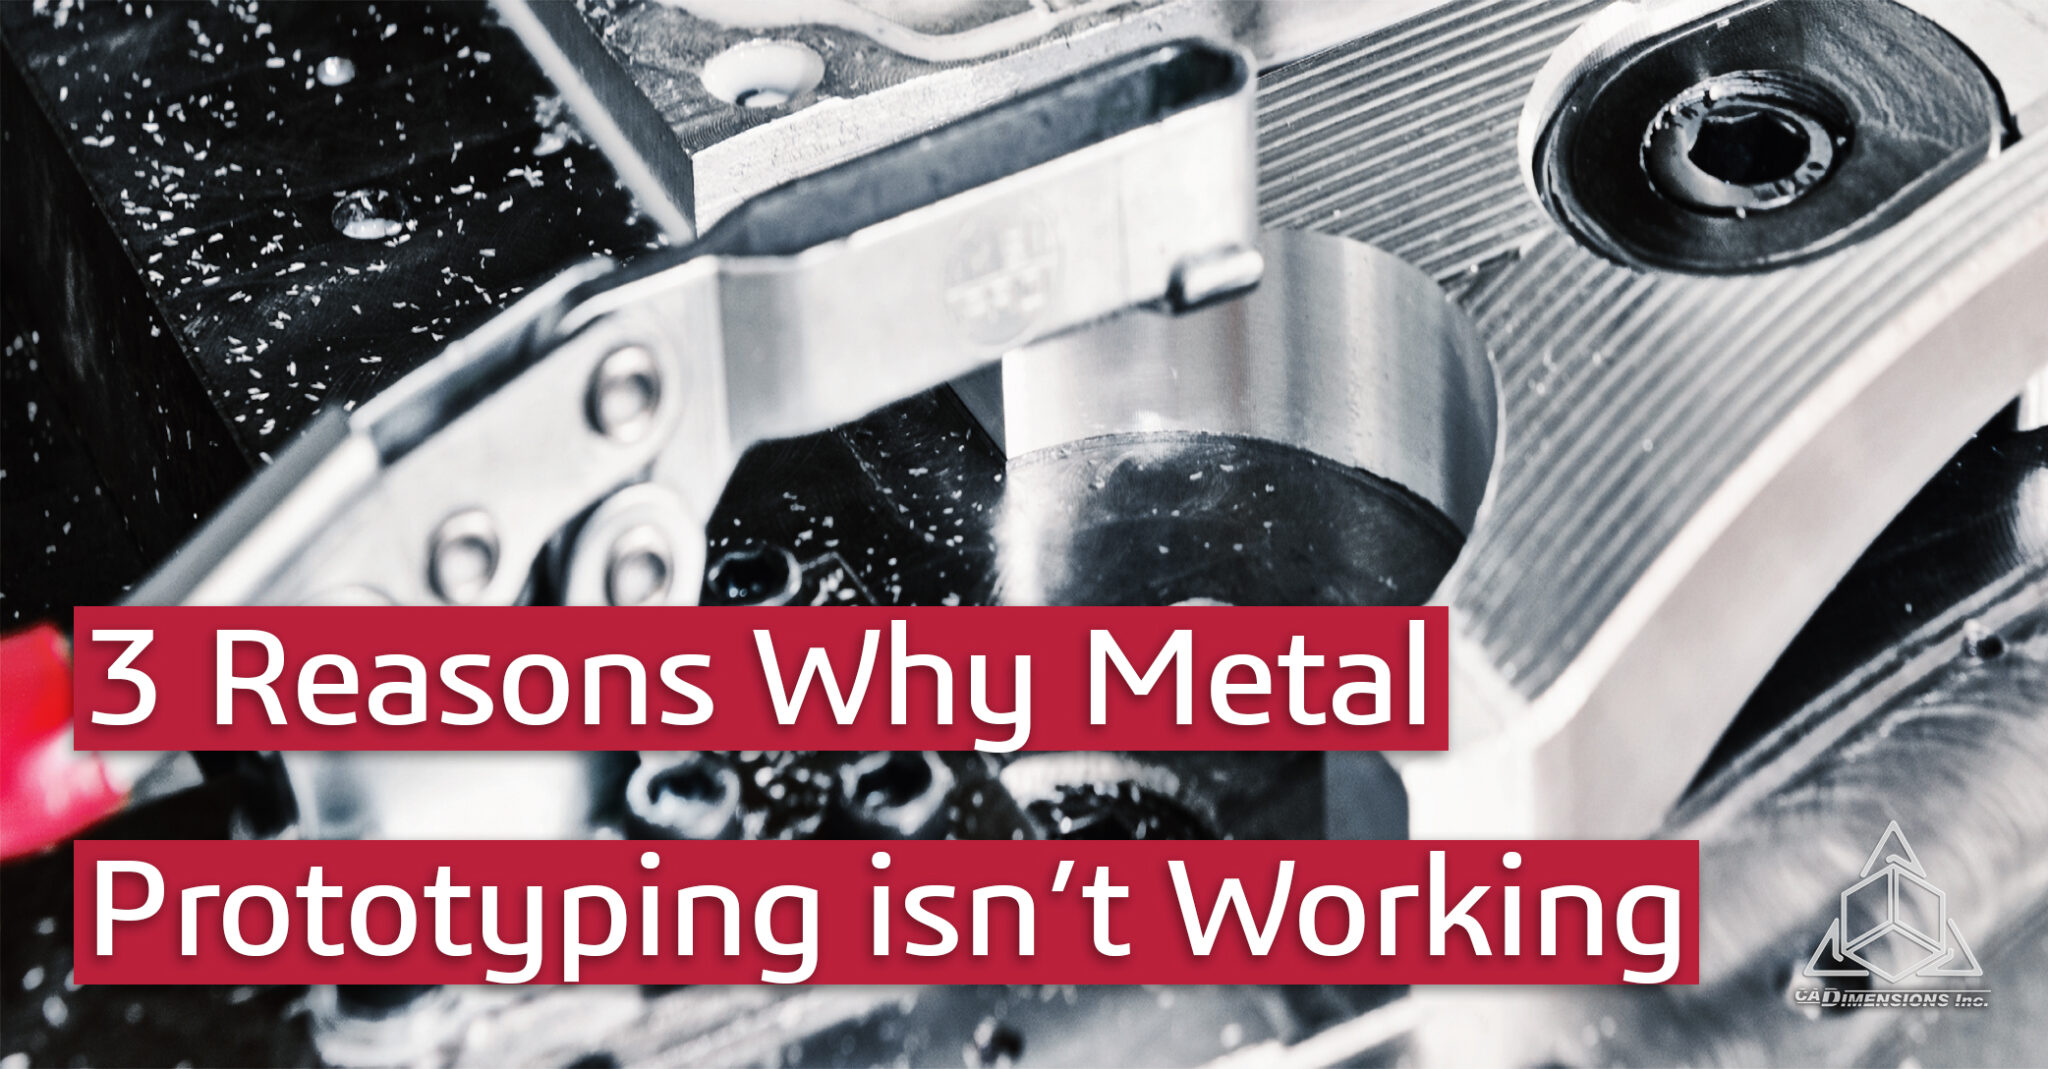 3 reasons metal prototyping today isn’t working - cadimensions - desktop metal - metal 3d printing